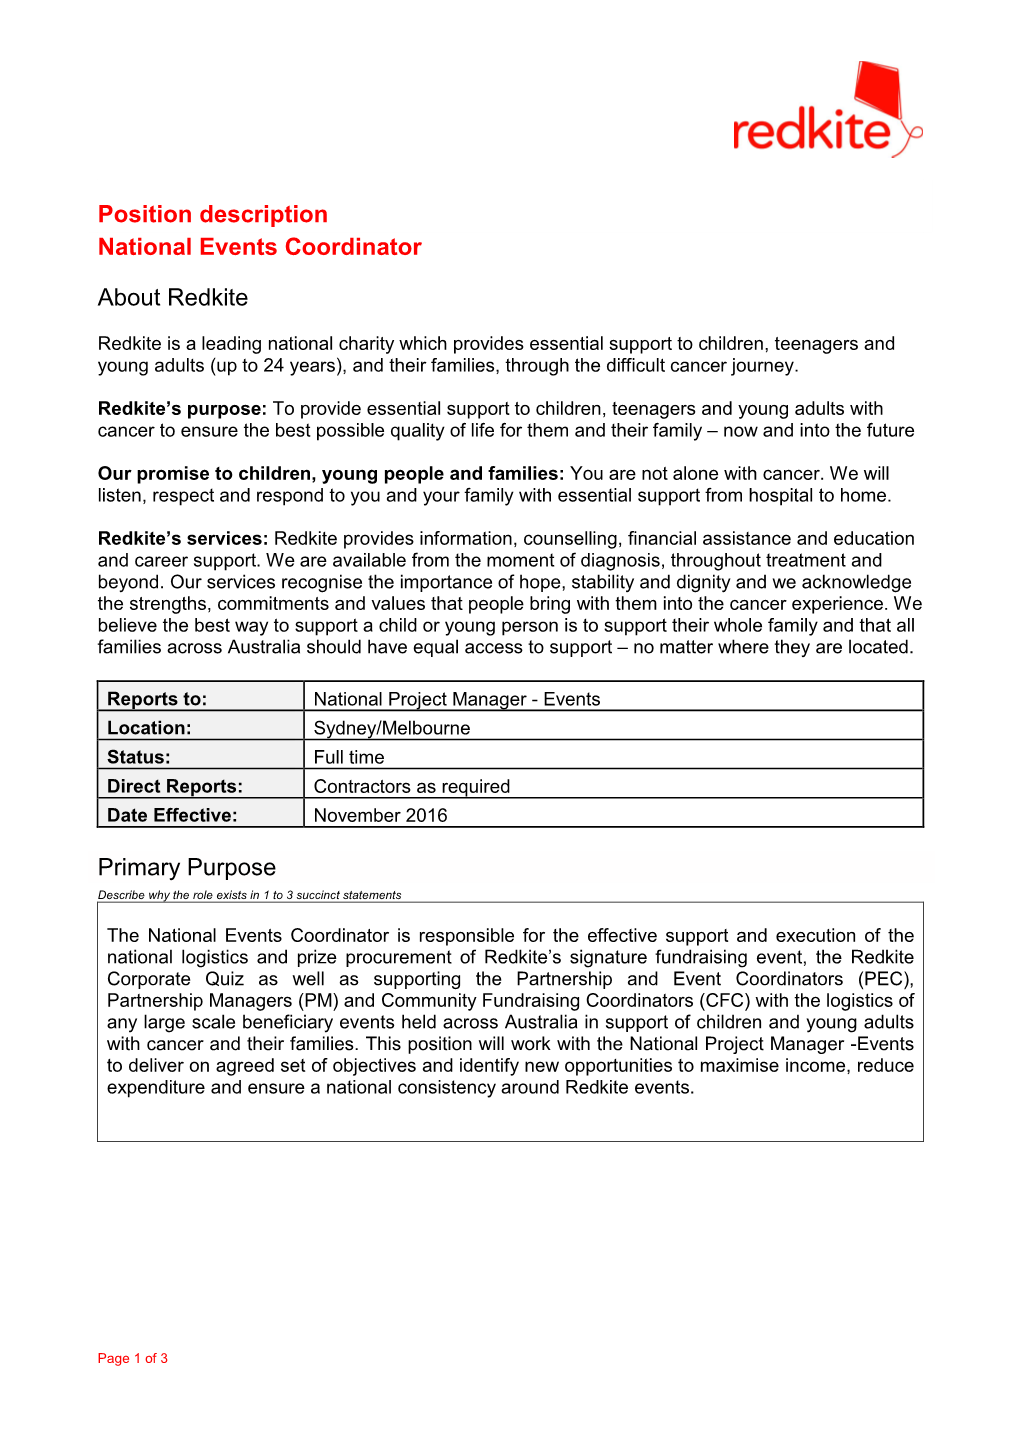 Position Description National Events Coordinator About Redkite